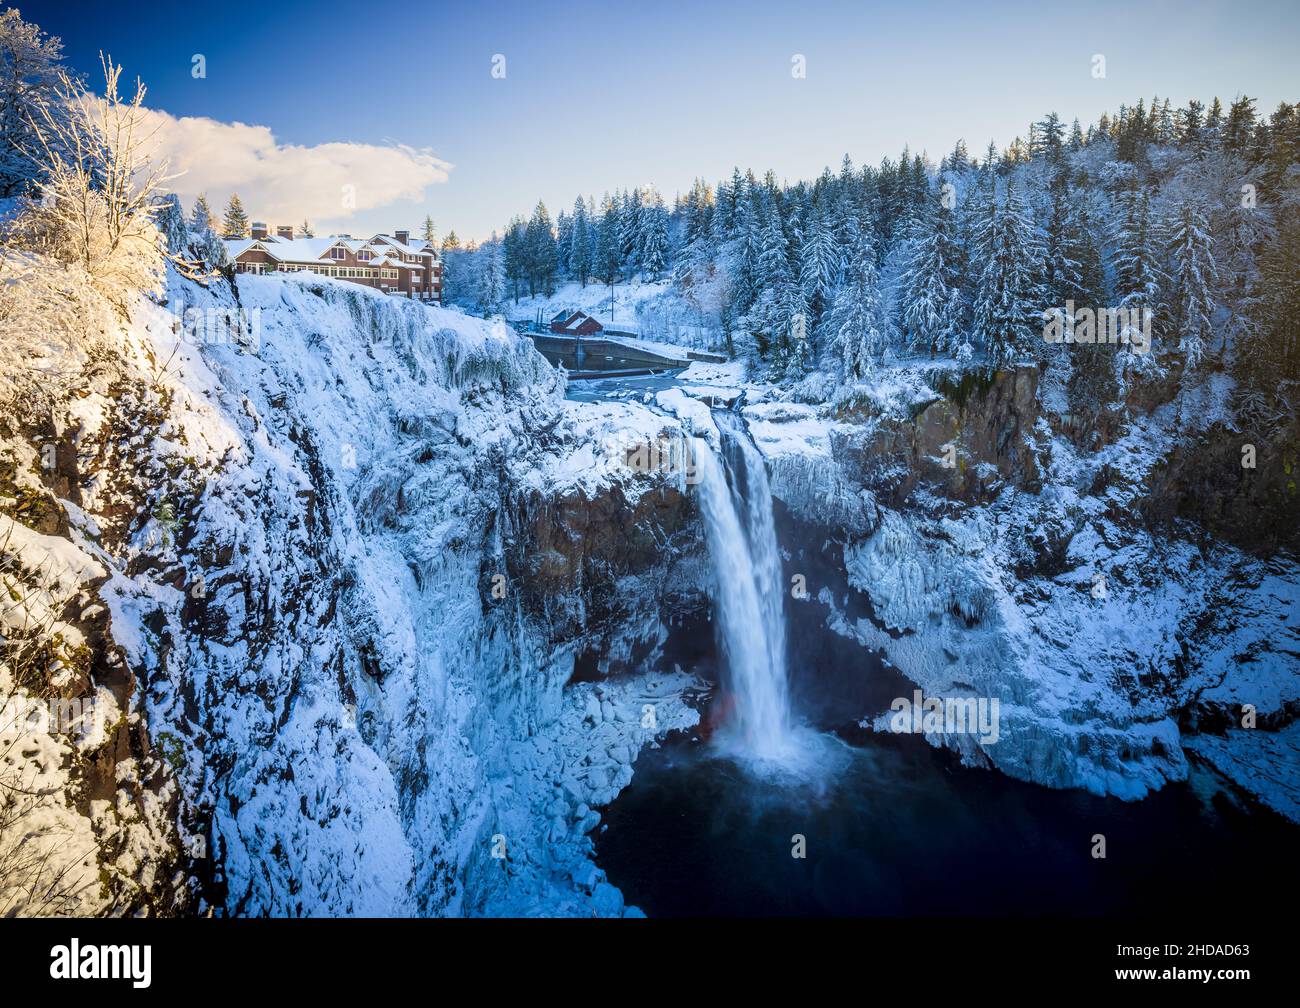 Snoqualmie Falls ist ein 268 m hoher Wasserfall am Snoqualmie River zwischen Snoqualmie und Fall City, Washington, USA. Stockfoto